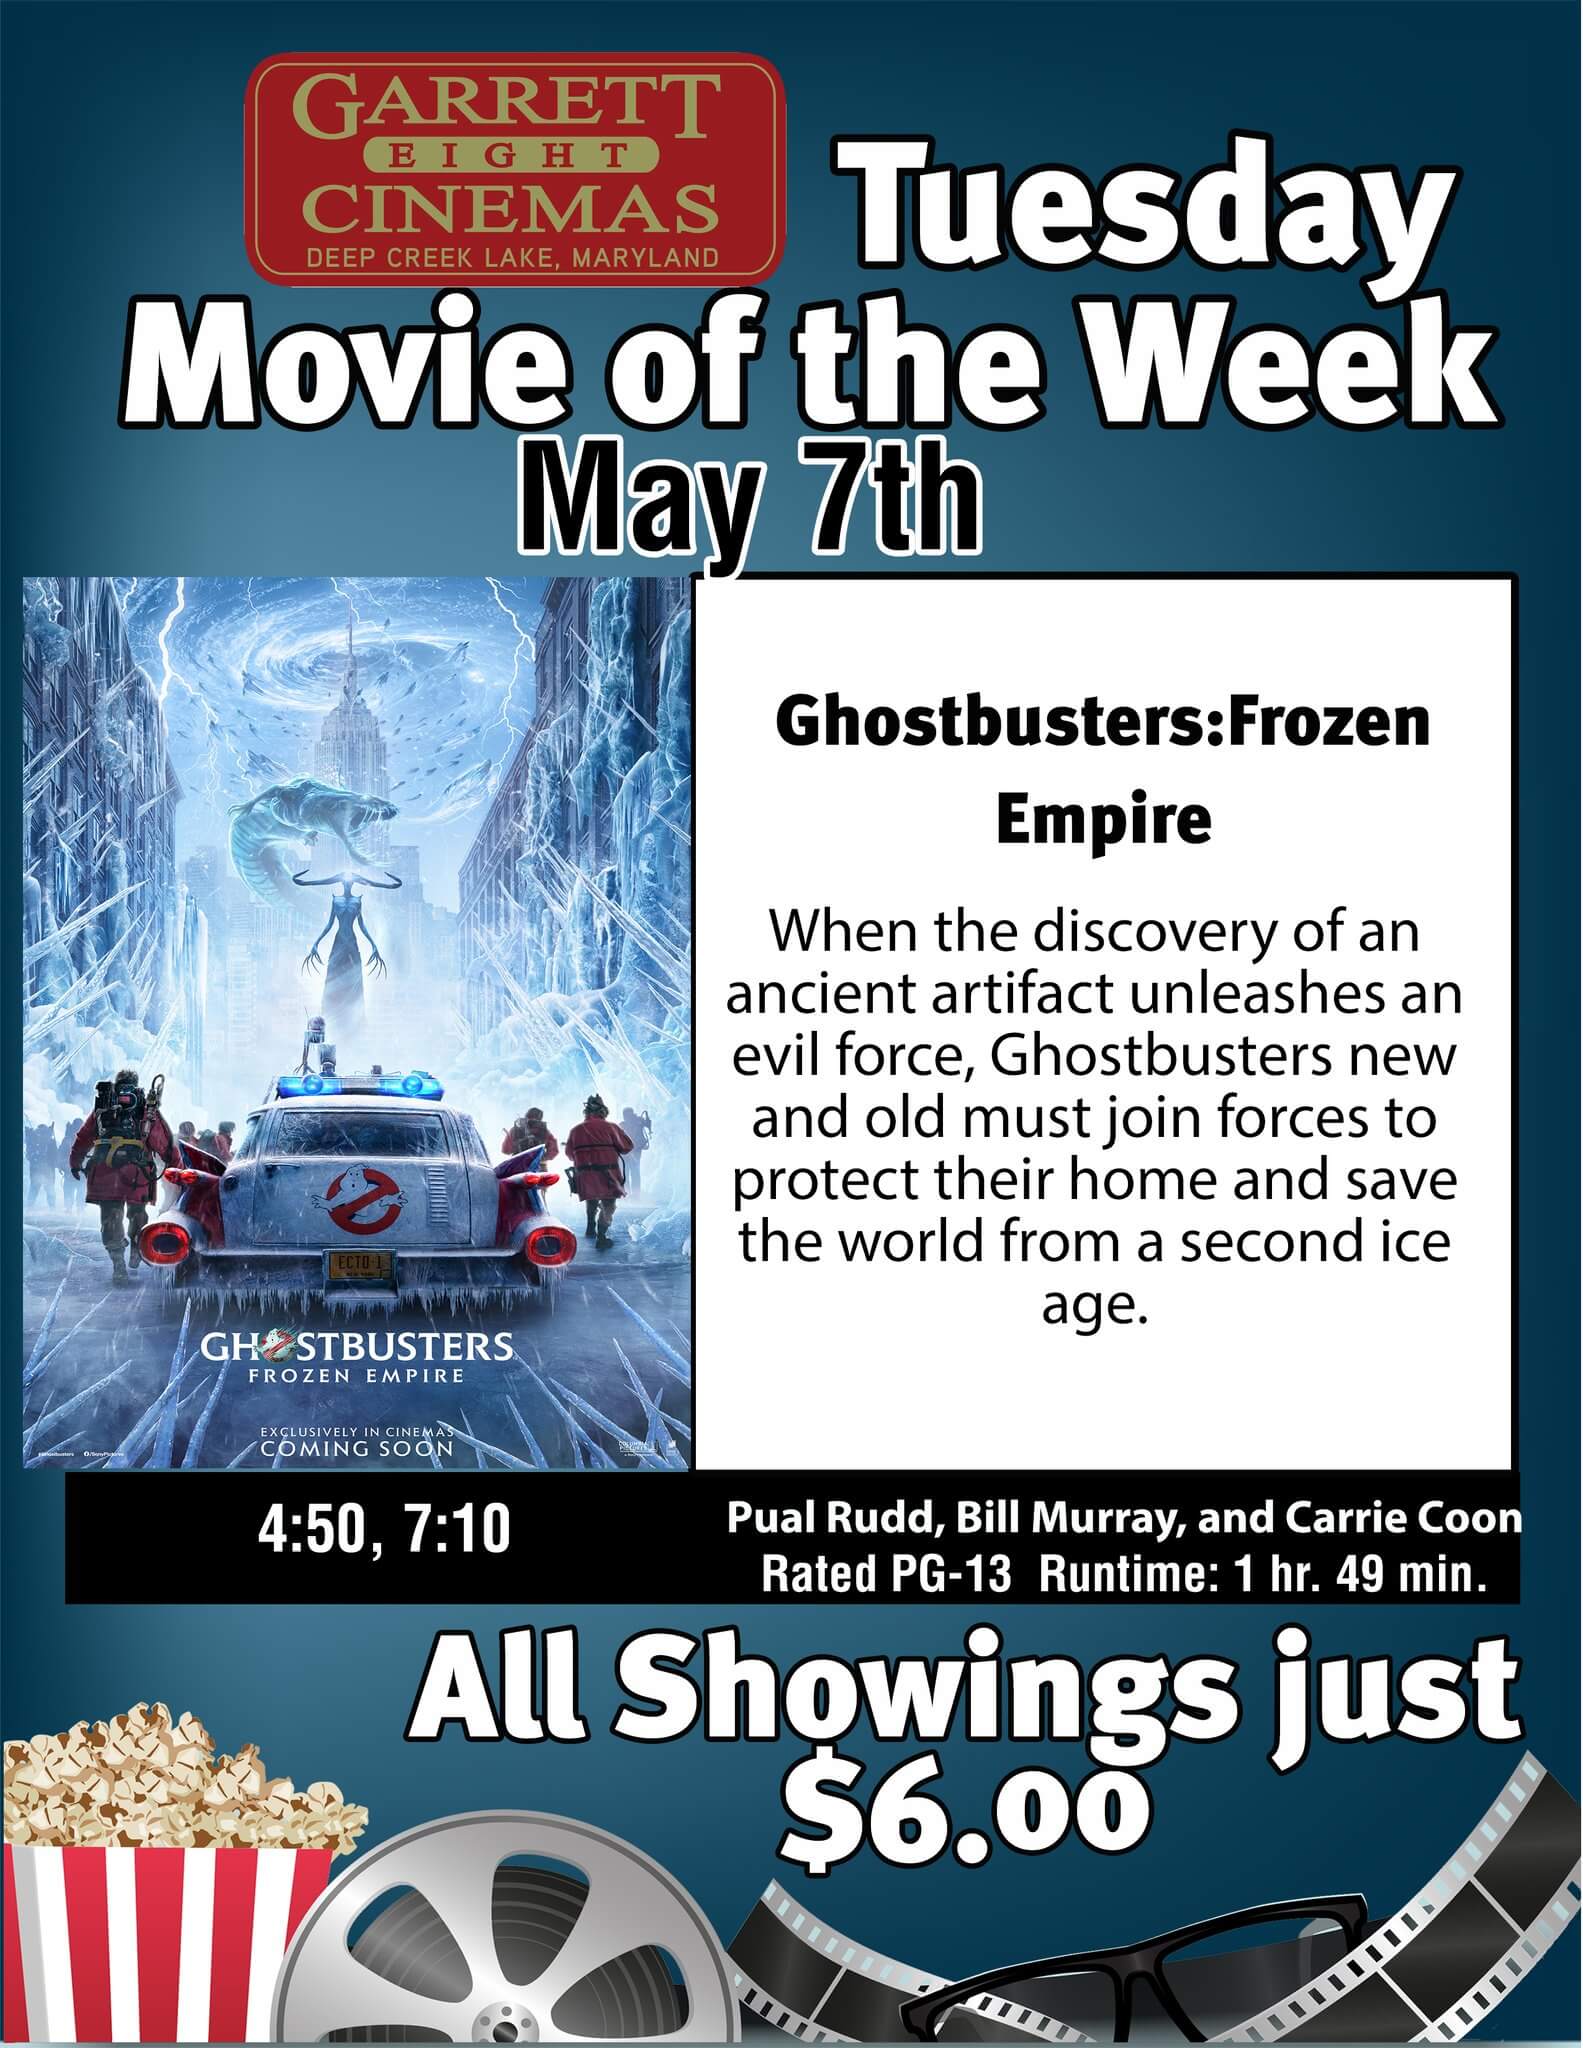 Garrett 8 Cinemas' Tuesday Movie of the Week- Ghostbusters- Frozen Empire at Deep Creek Lake, MD